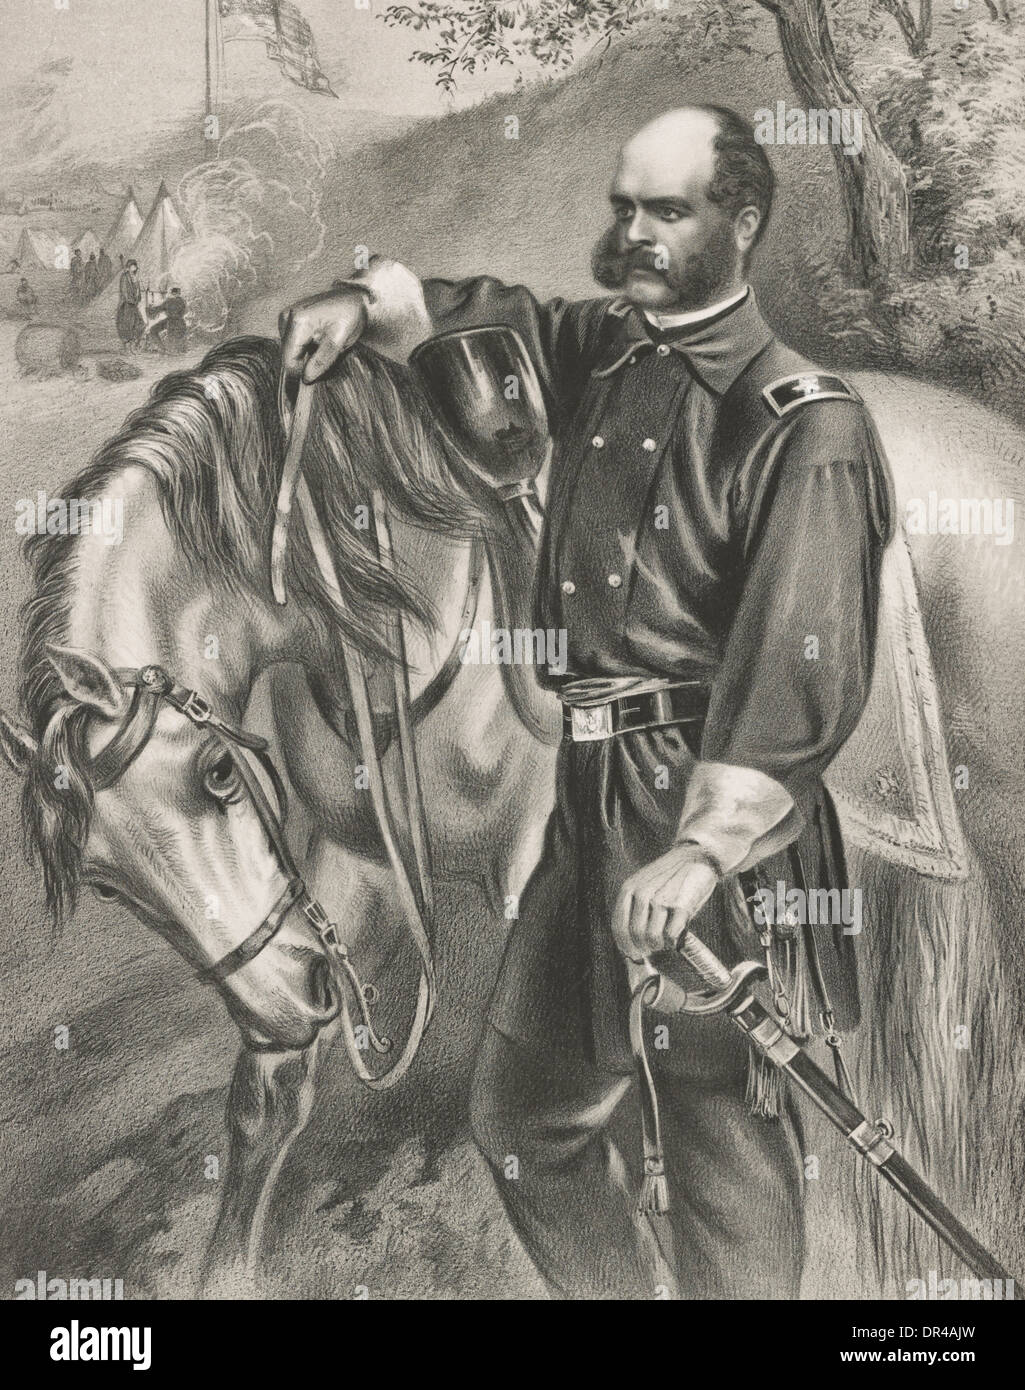 Brigadier General Burnside, USA Army, American Civil War 1861 Stock Photo